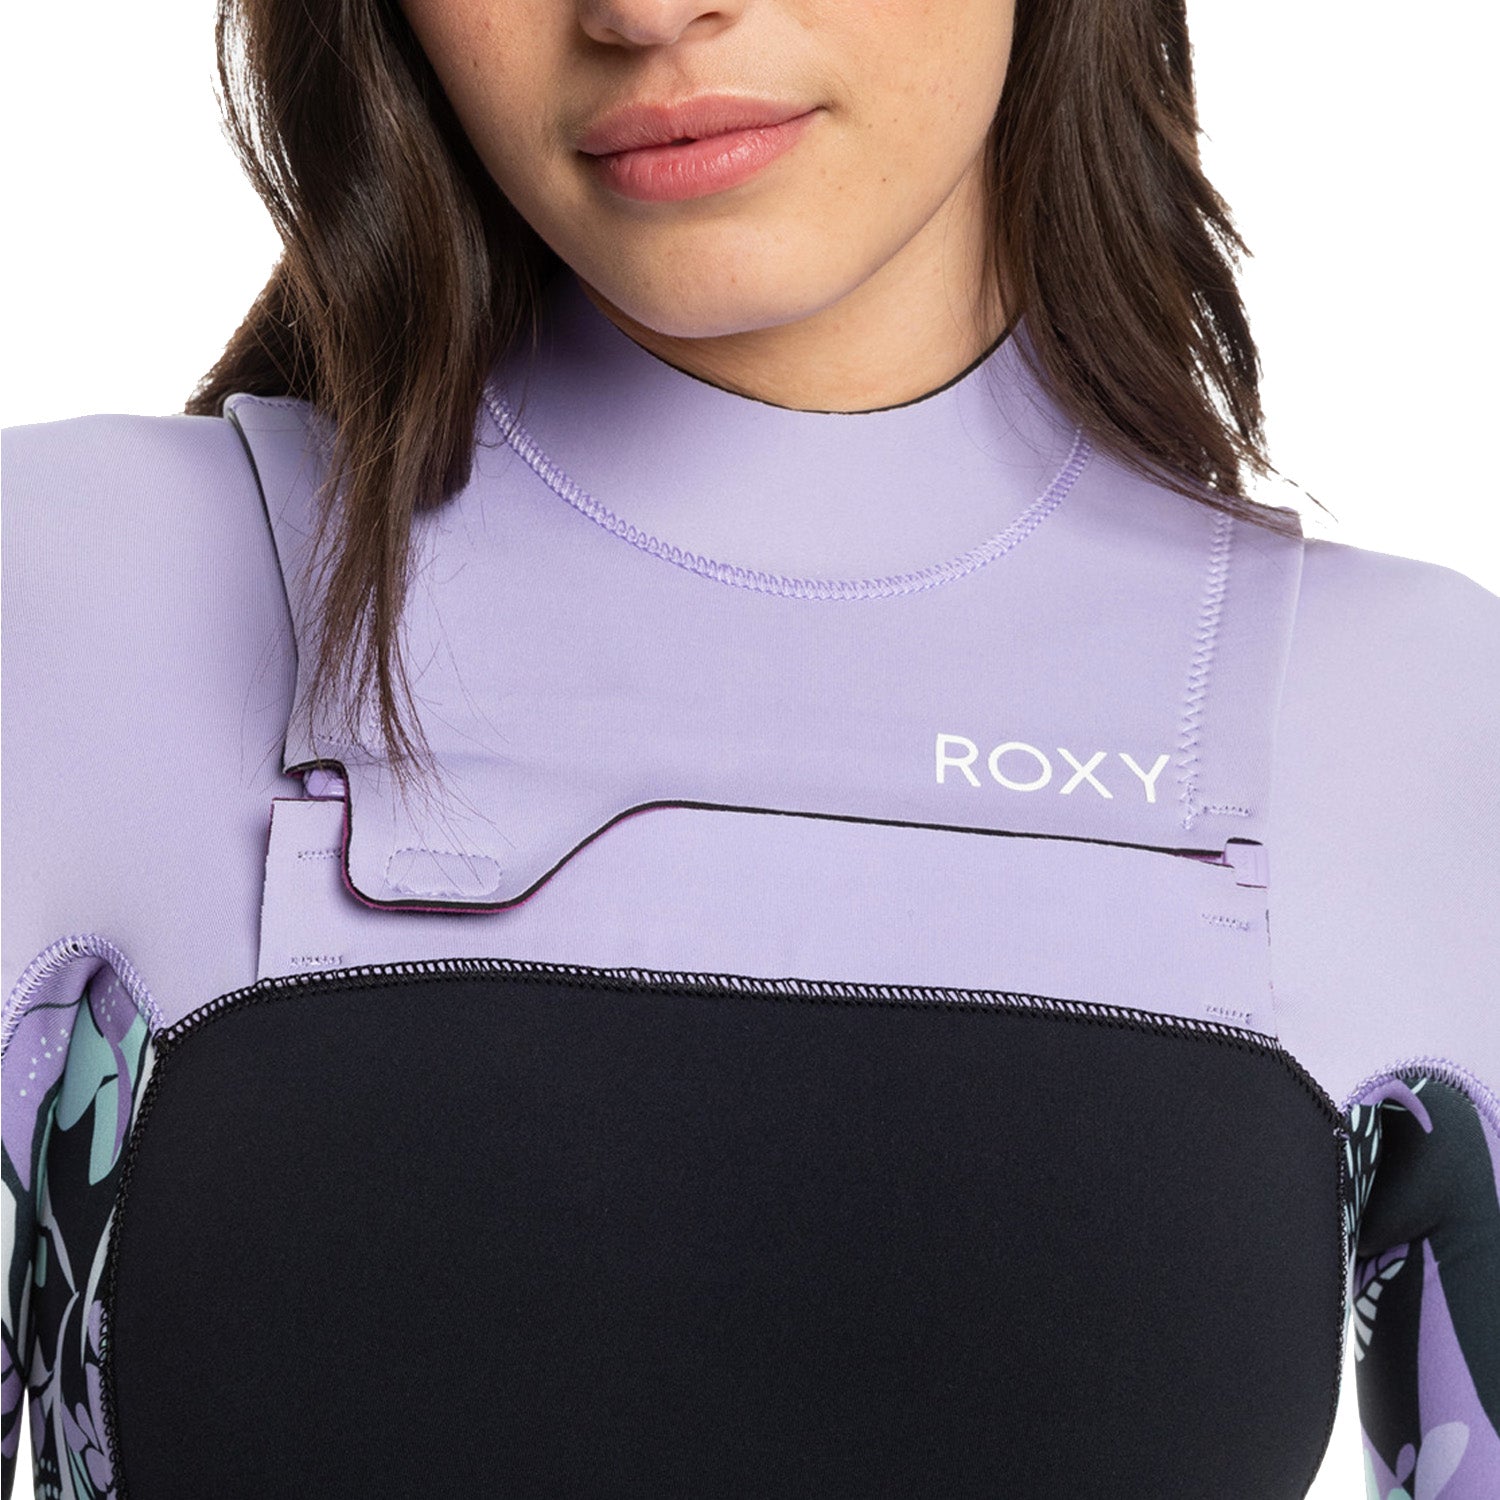 Roxy | Integrale Femme Swell Series 5/4/3 Chest Zip - Anthracite Splash